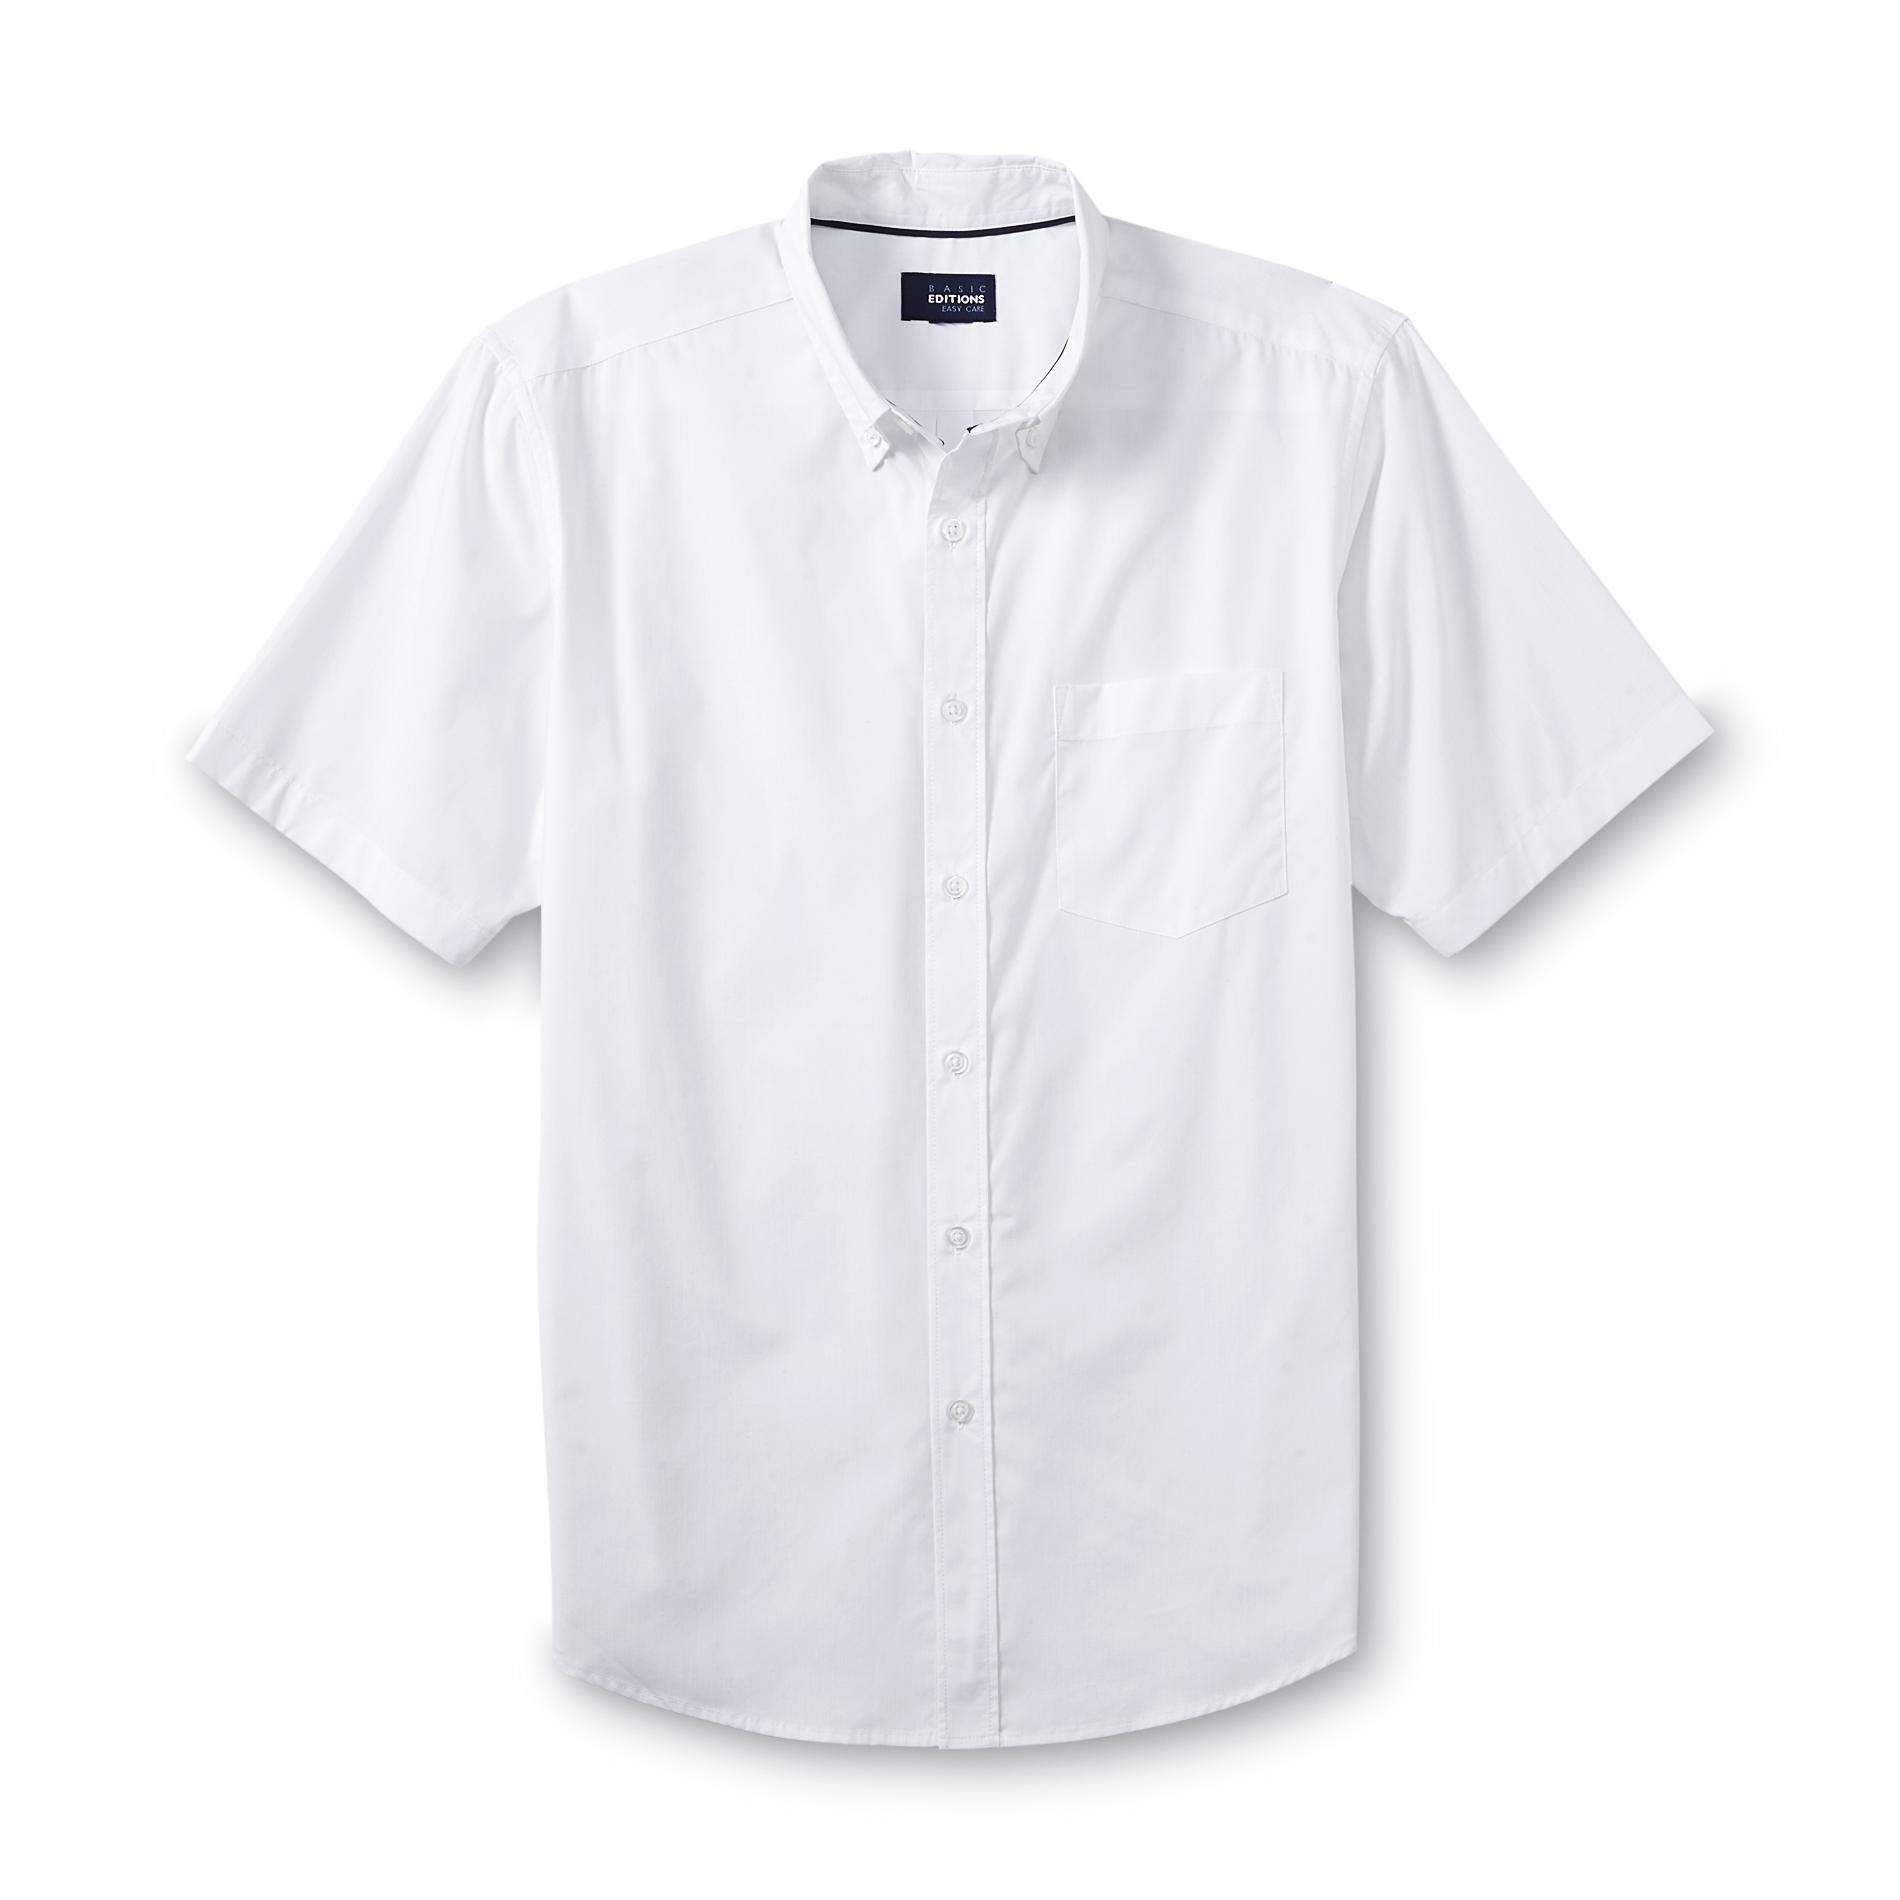 Basic Editions Men's Easy Care Short-Sleeve Dress Shirt